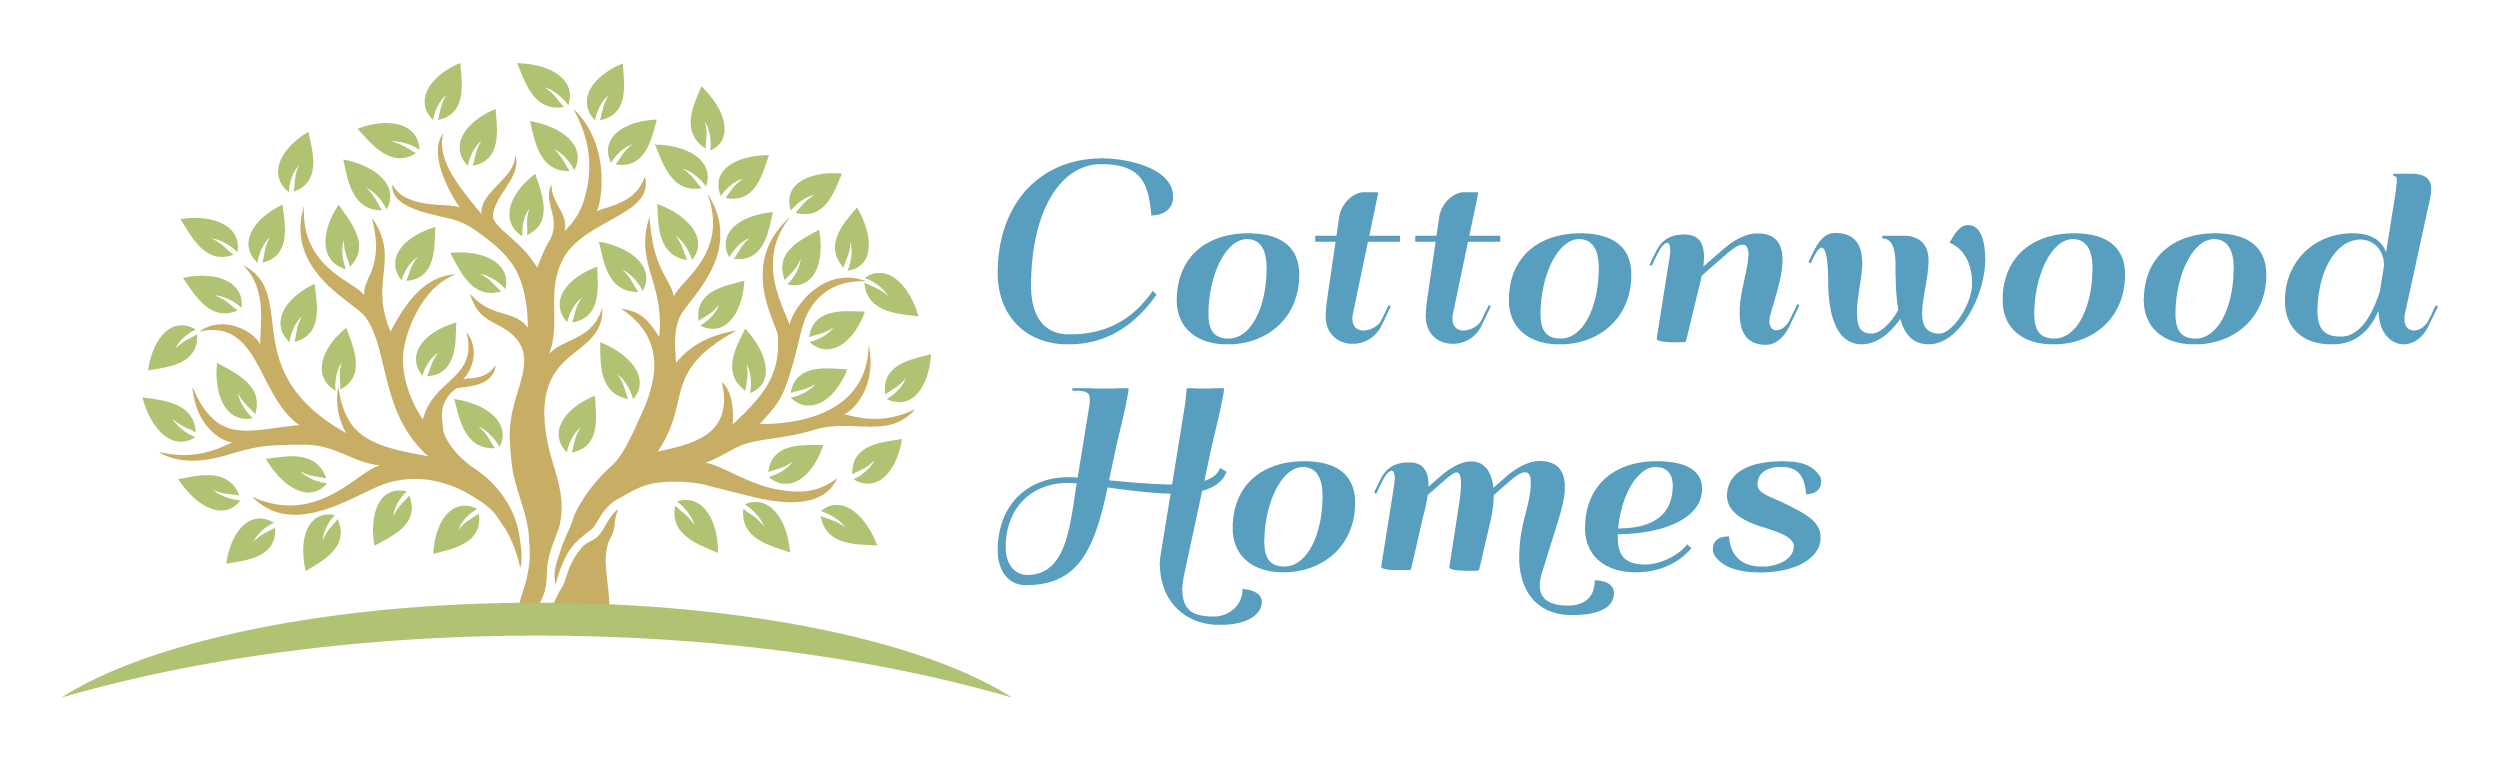 Cottonwood-Homes_horz